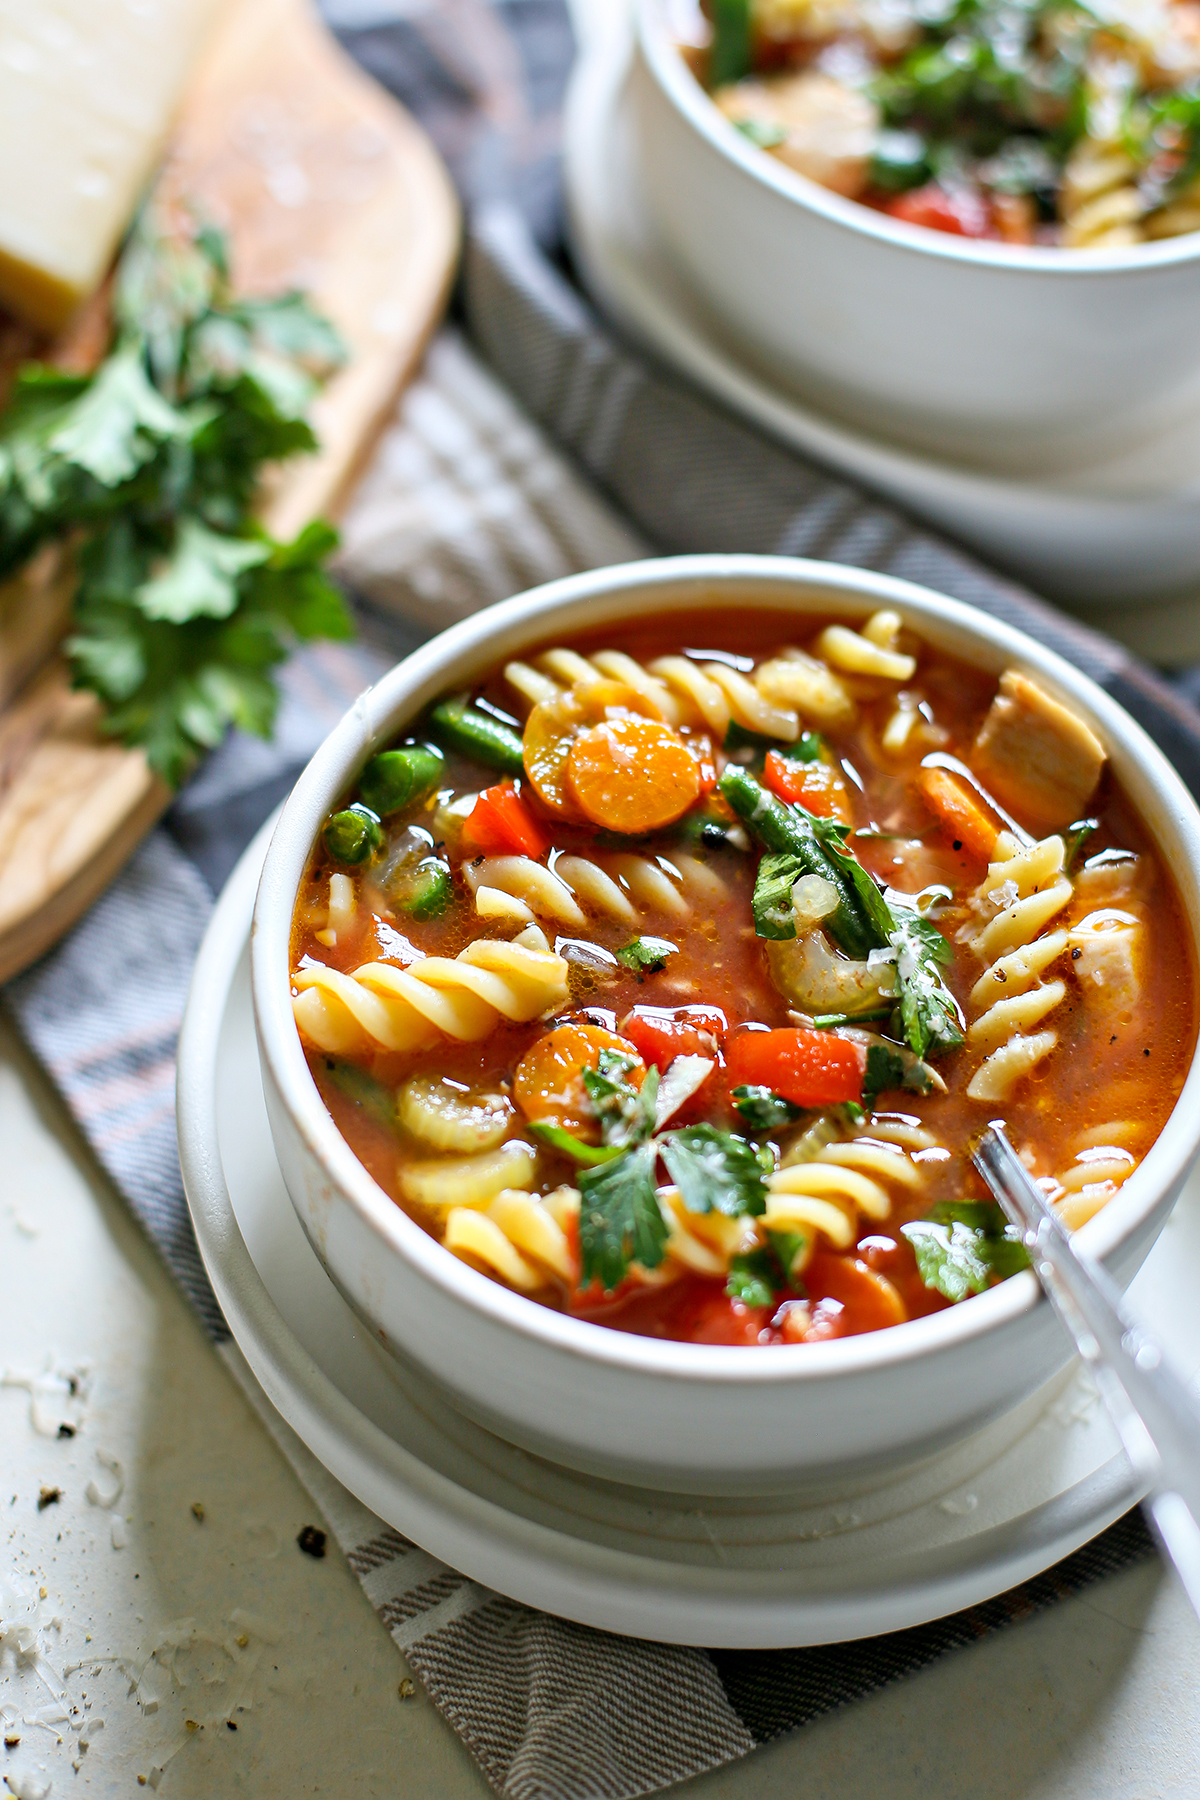 https://www.goodlifeeats.com/wp-content/uploads/2022/11/Turkey-and-Vegetable-Soup-Recipe.jpg